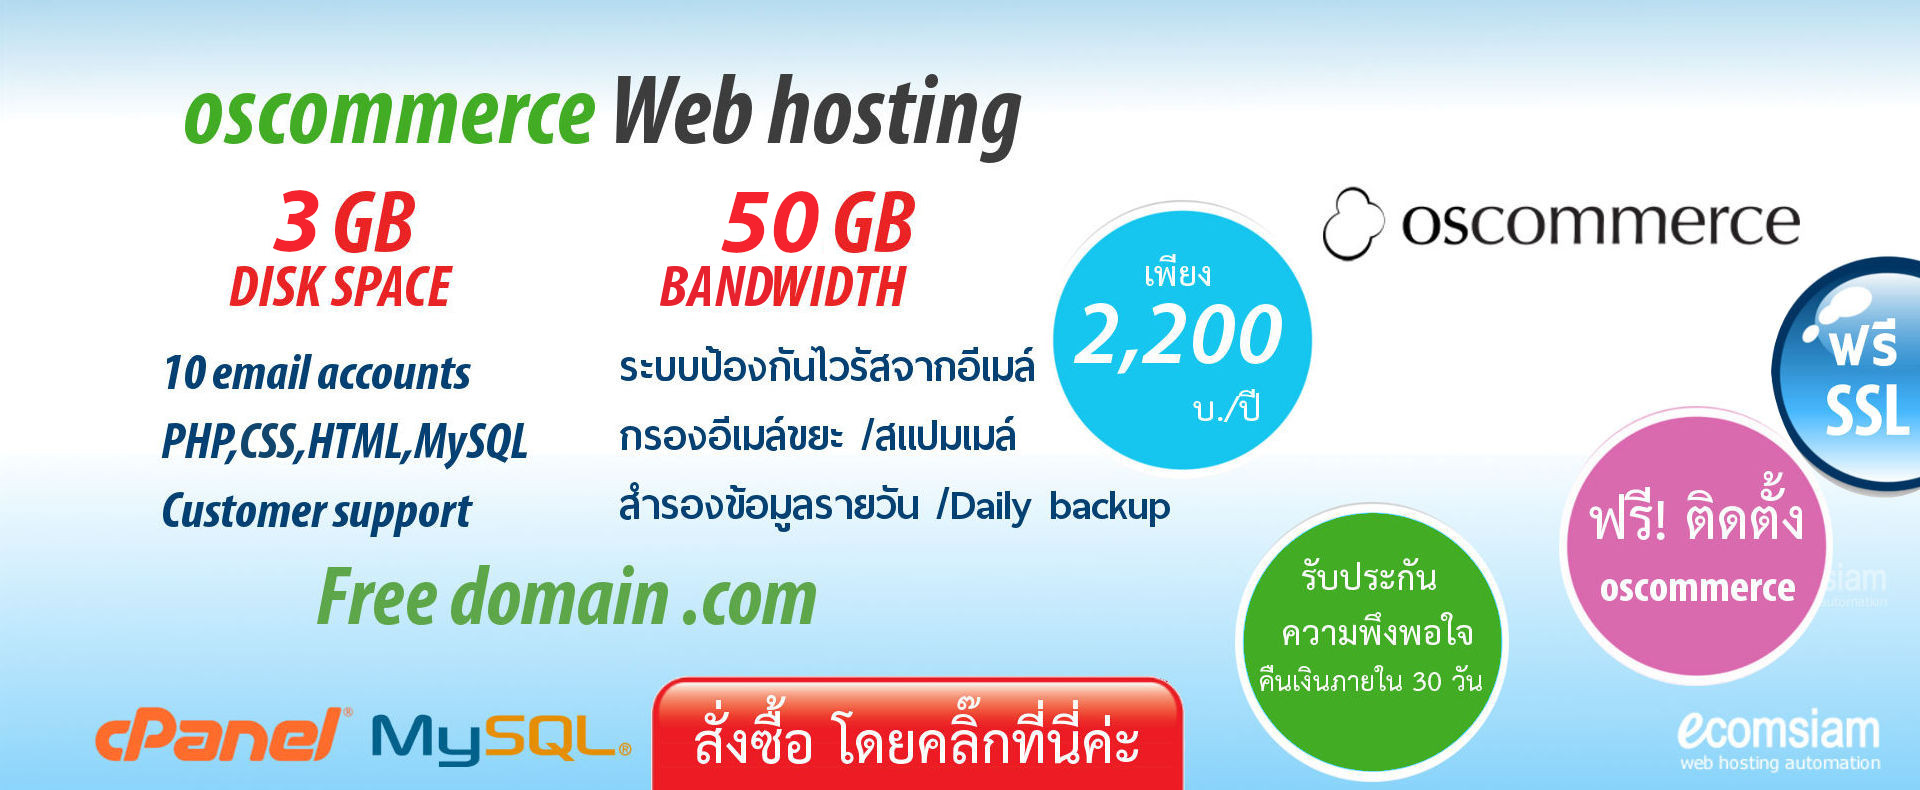 web hosting thai แนะนำ Oscommerce web hosting thailand เพียง 2,200 บ./ปี เว็บโฮสติ้งไทย ฟรี โดเมน ฟรี SSL ฟรีติดตั้ง แนะนำเว็บโฮสติ้ง บริการลูกค้า  Support ดูแลดี โดย ecomsiam.com - oscommerce web hosting thailand free domain